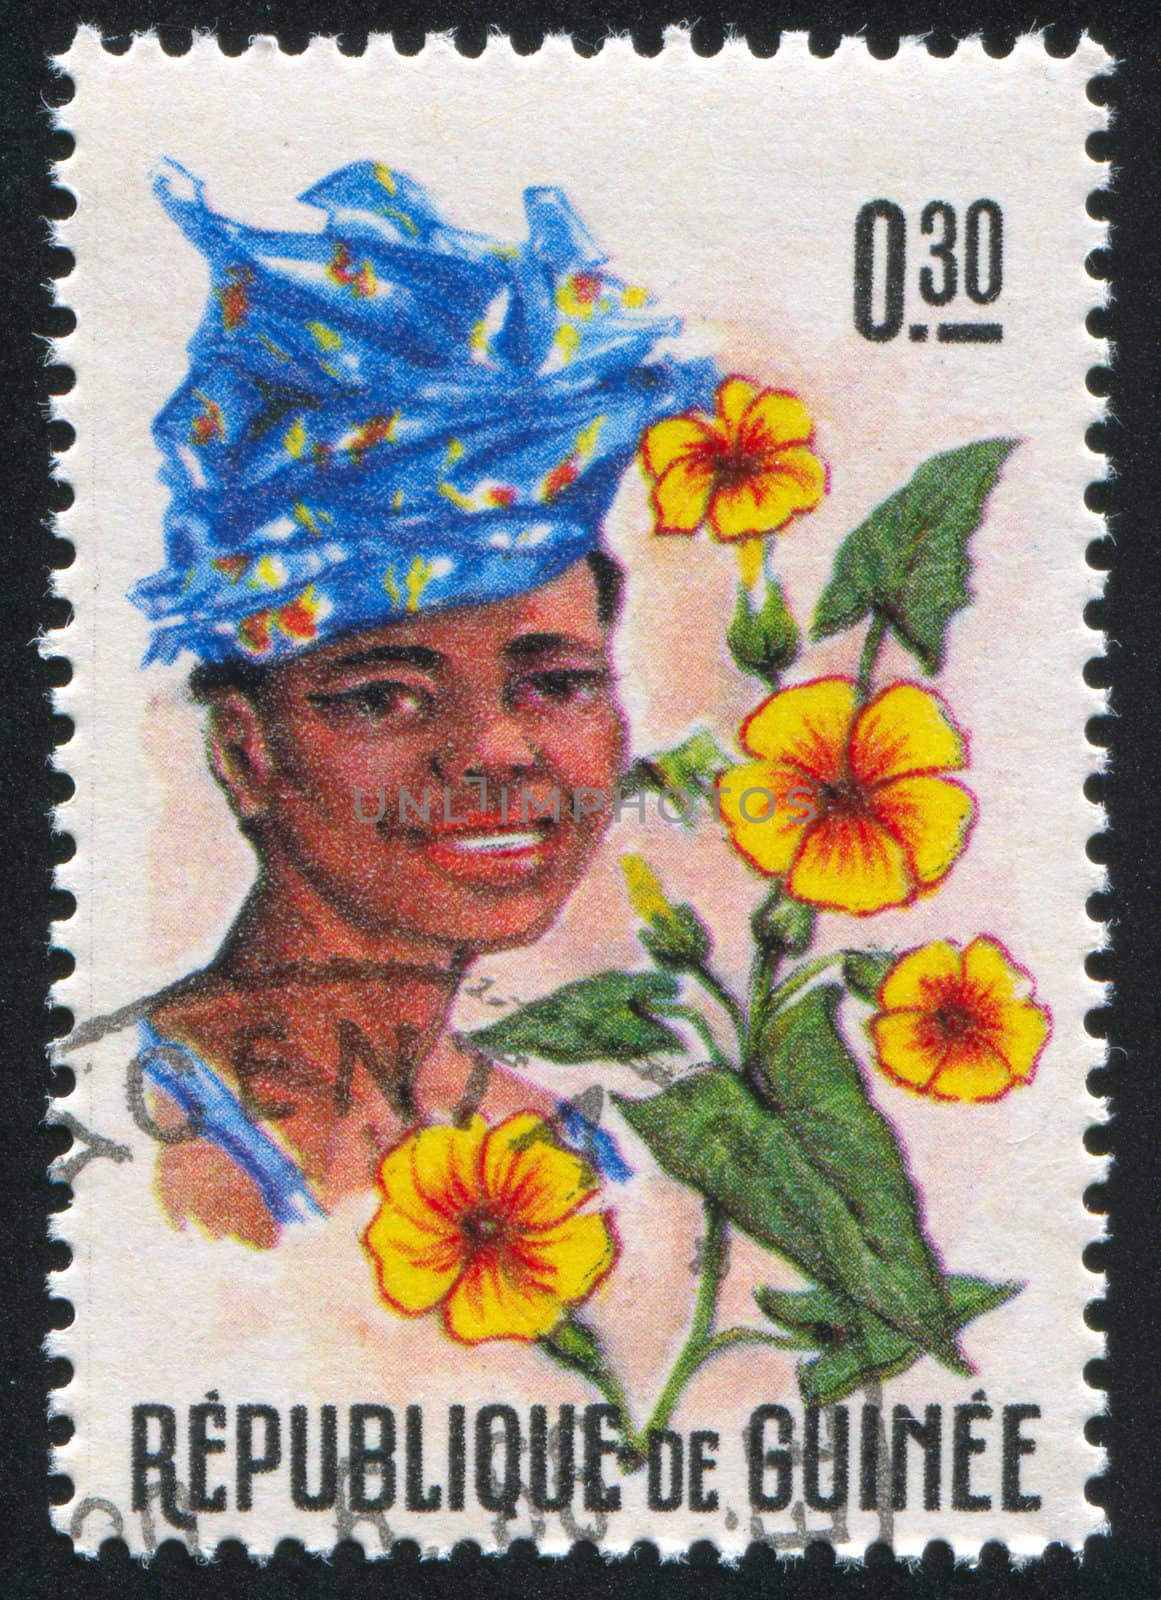 GUINEA CIRCA 1966: stamp printed by Guinea, shows Women and Flowers of Guinea, circa 1966